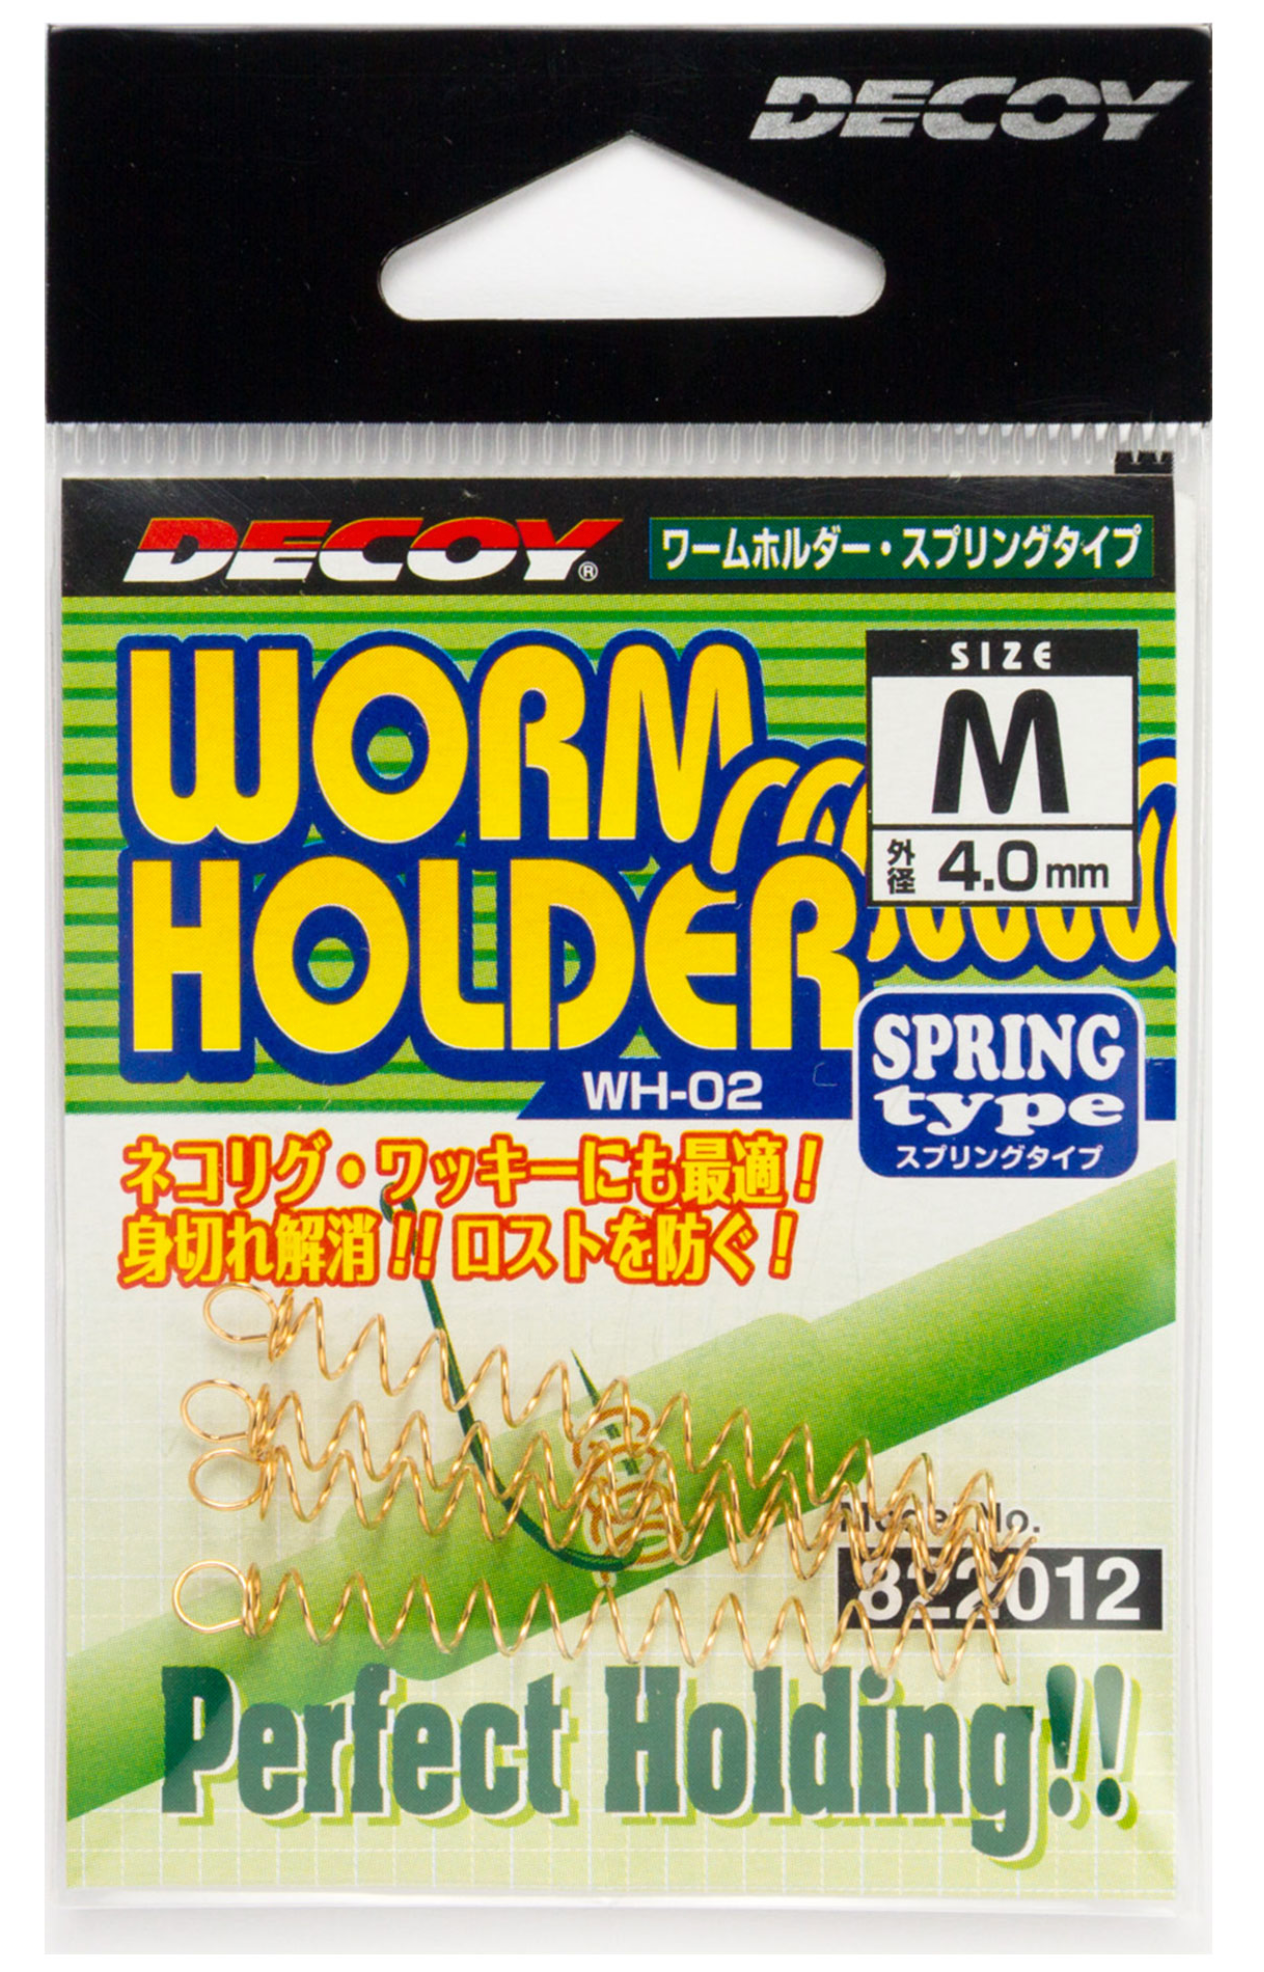 Decoy WH-02 Worm Holder Spring